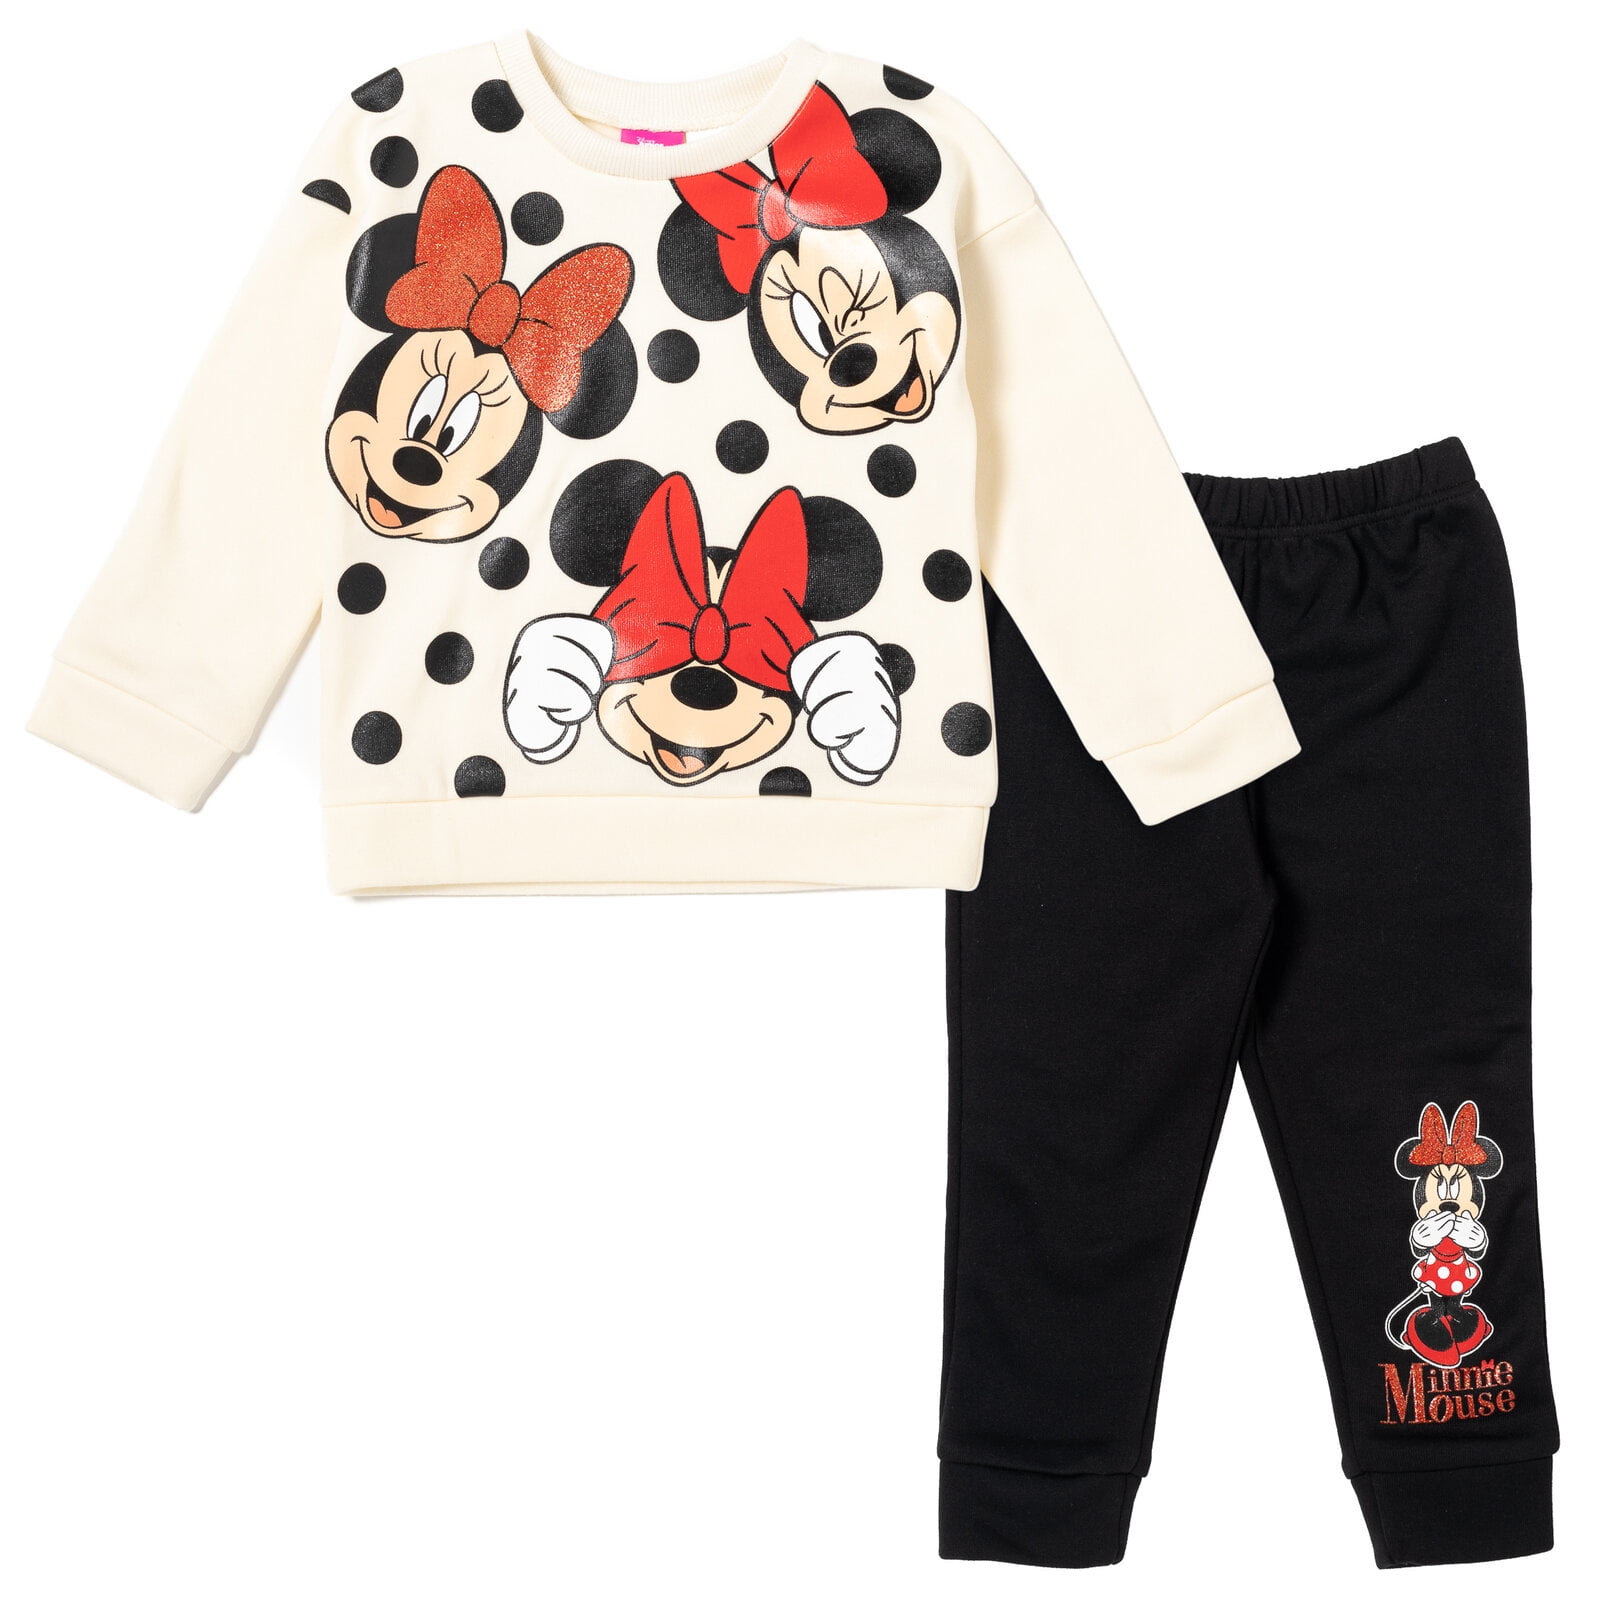 Disney Minnie Mouse Toddler Girls Pullover Fleece Sweatshirt